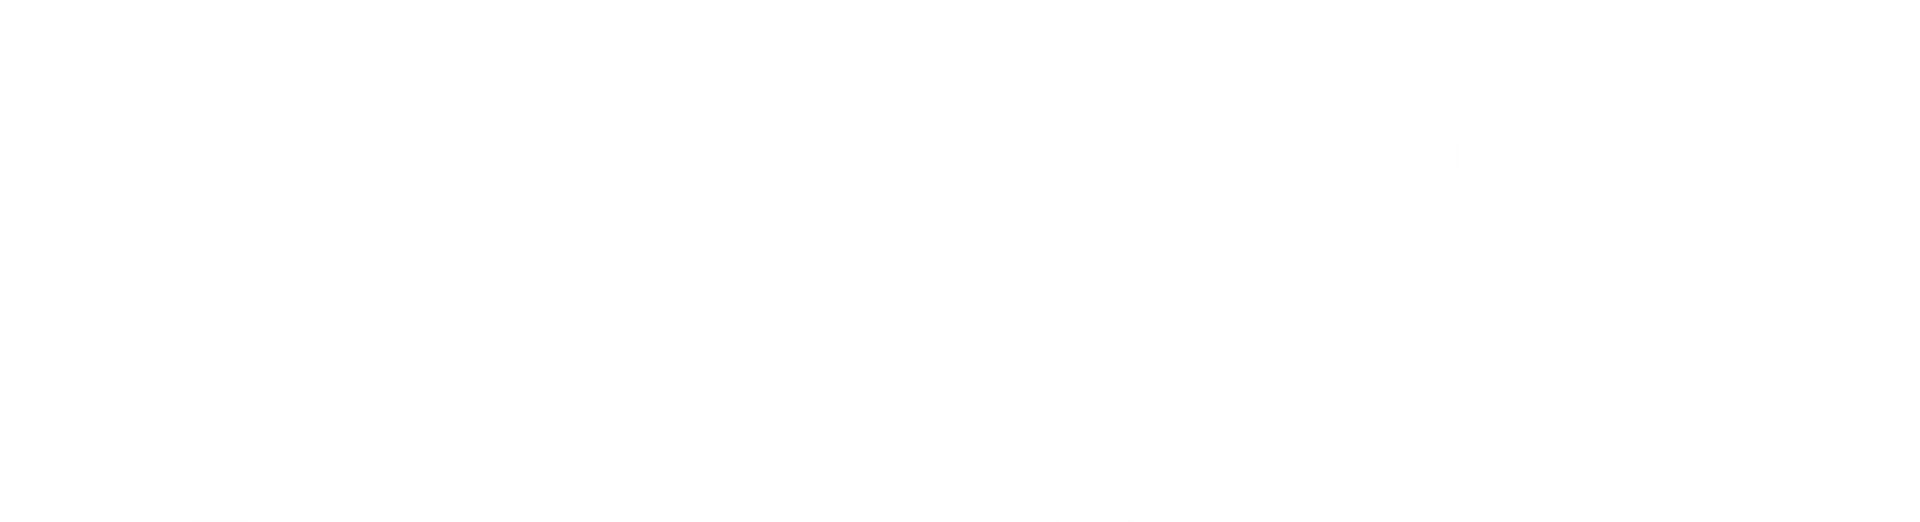 European City of Science logo